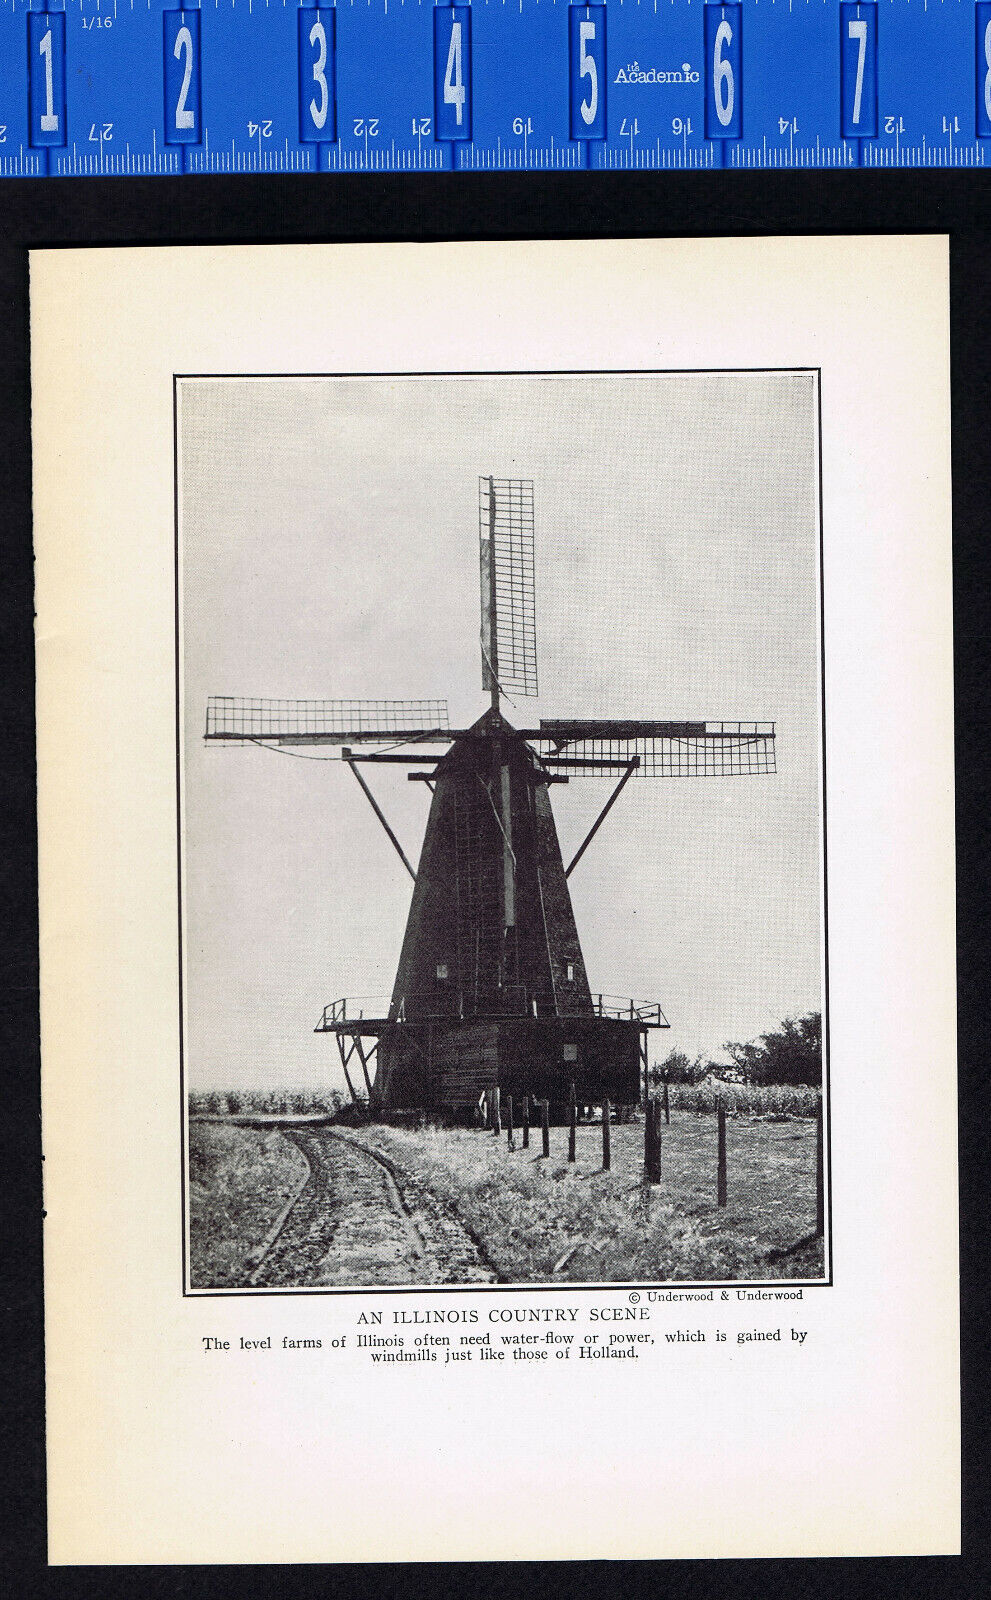 Illinois Farm Windmill, Wind Power -1925 Page of History